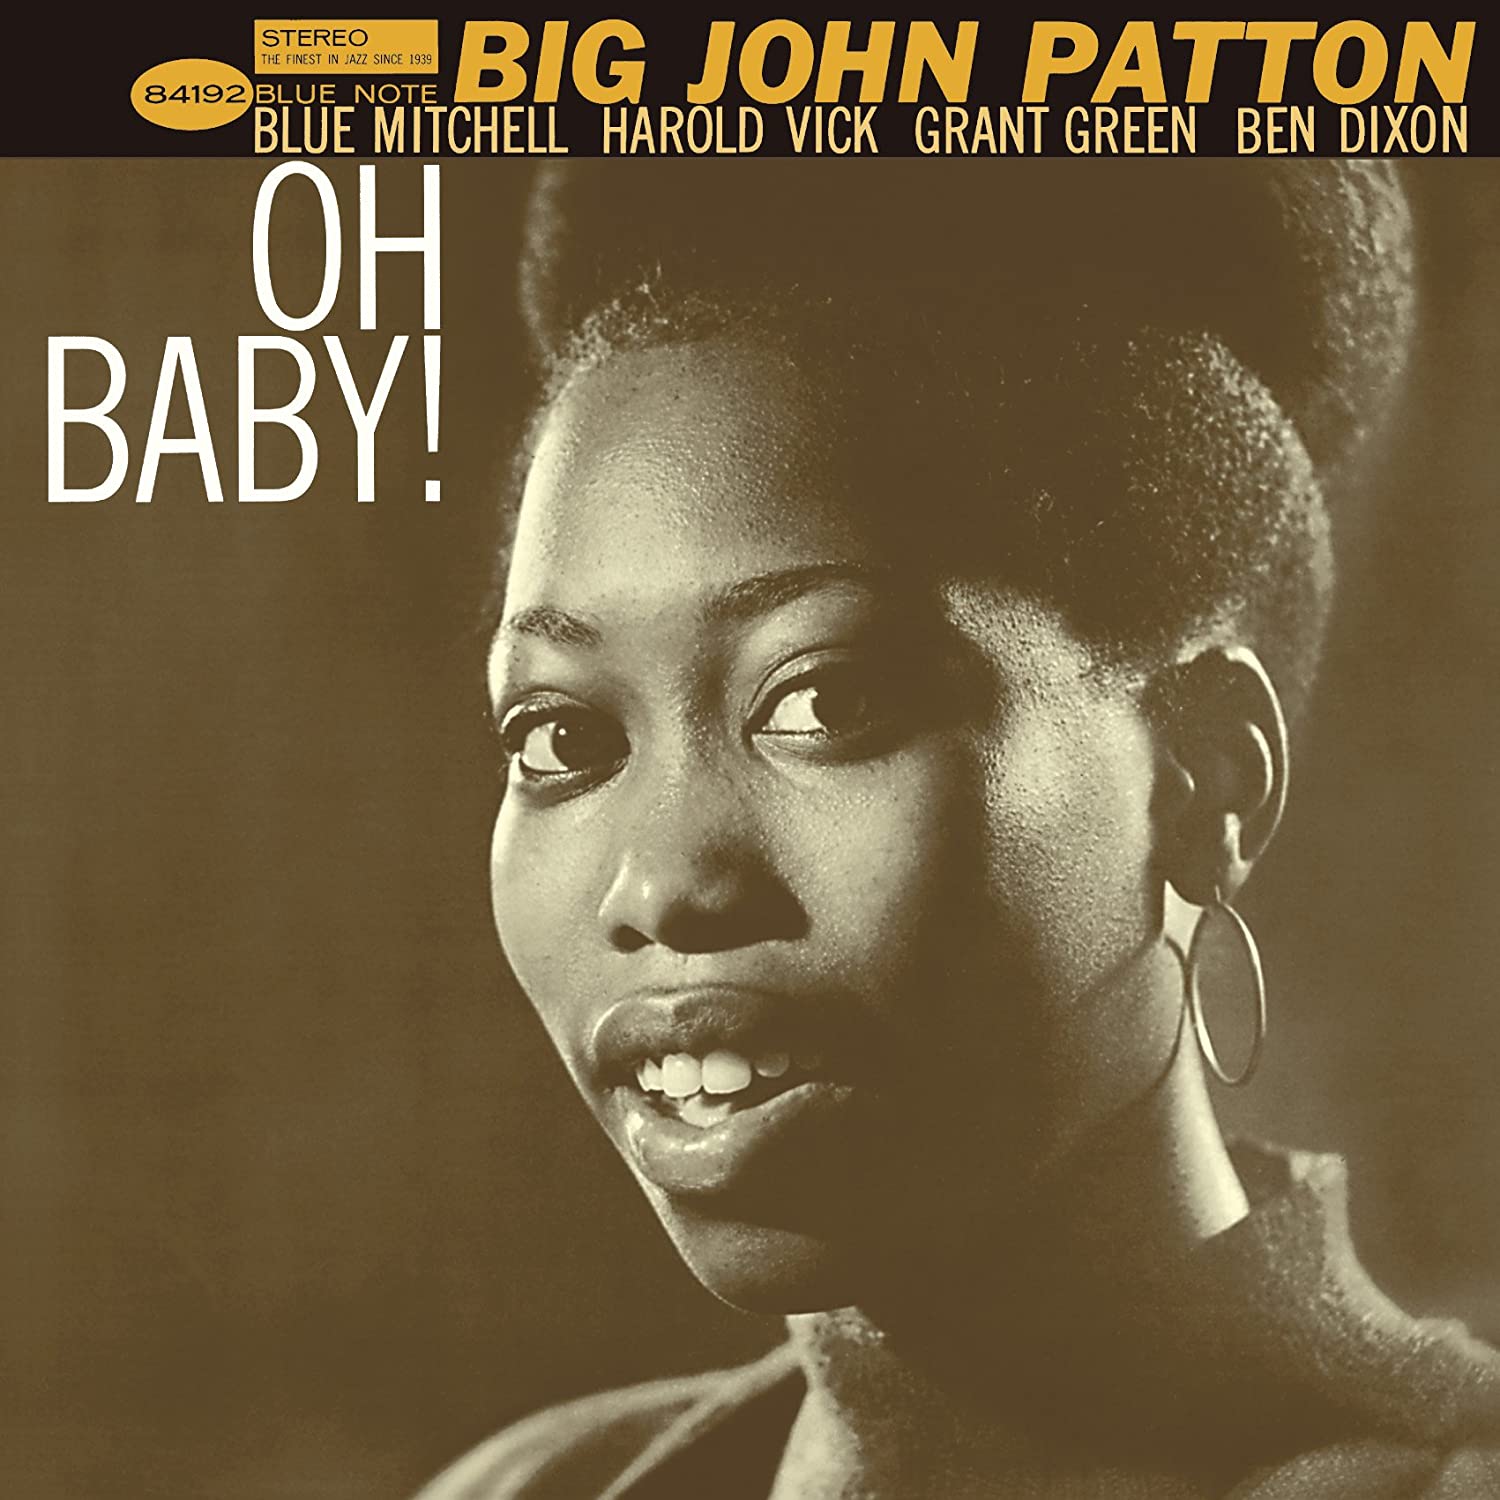 BIG JOHN PATTON "OH BABY" VINYLE